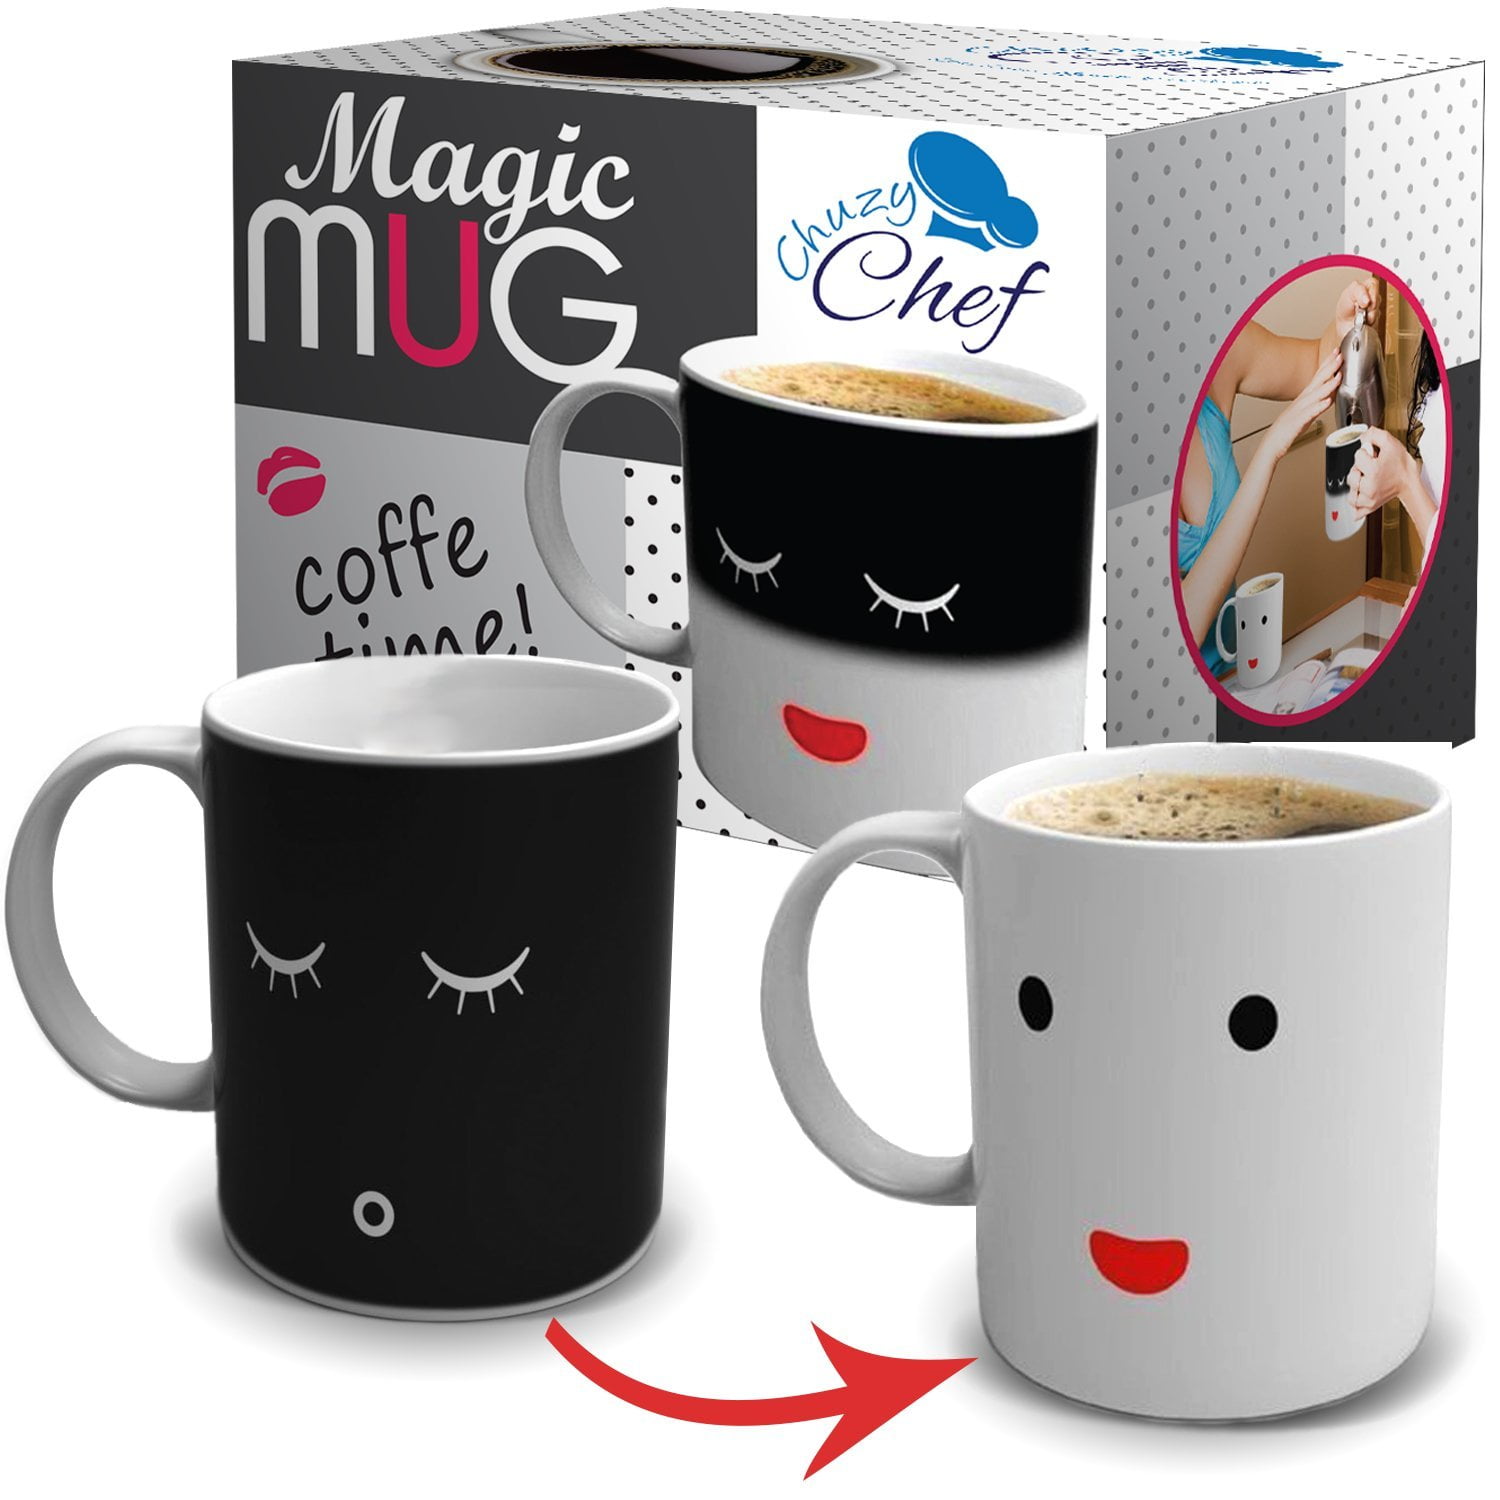 SCSF Its Always Tea Time Coffee Mugs Heat Sensitive Morph Mug Ceramic Material Color Change Morning Mug 11 Ounces